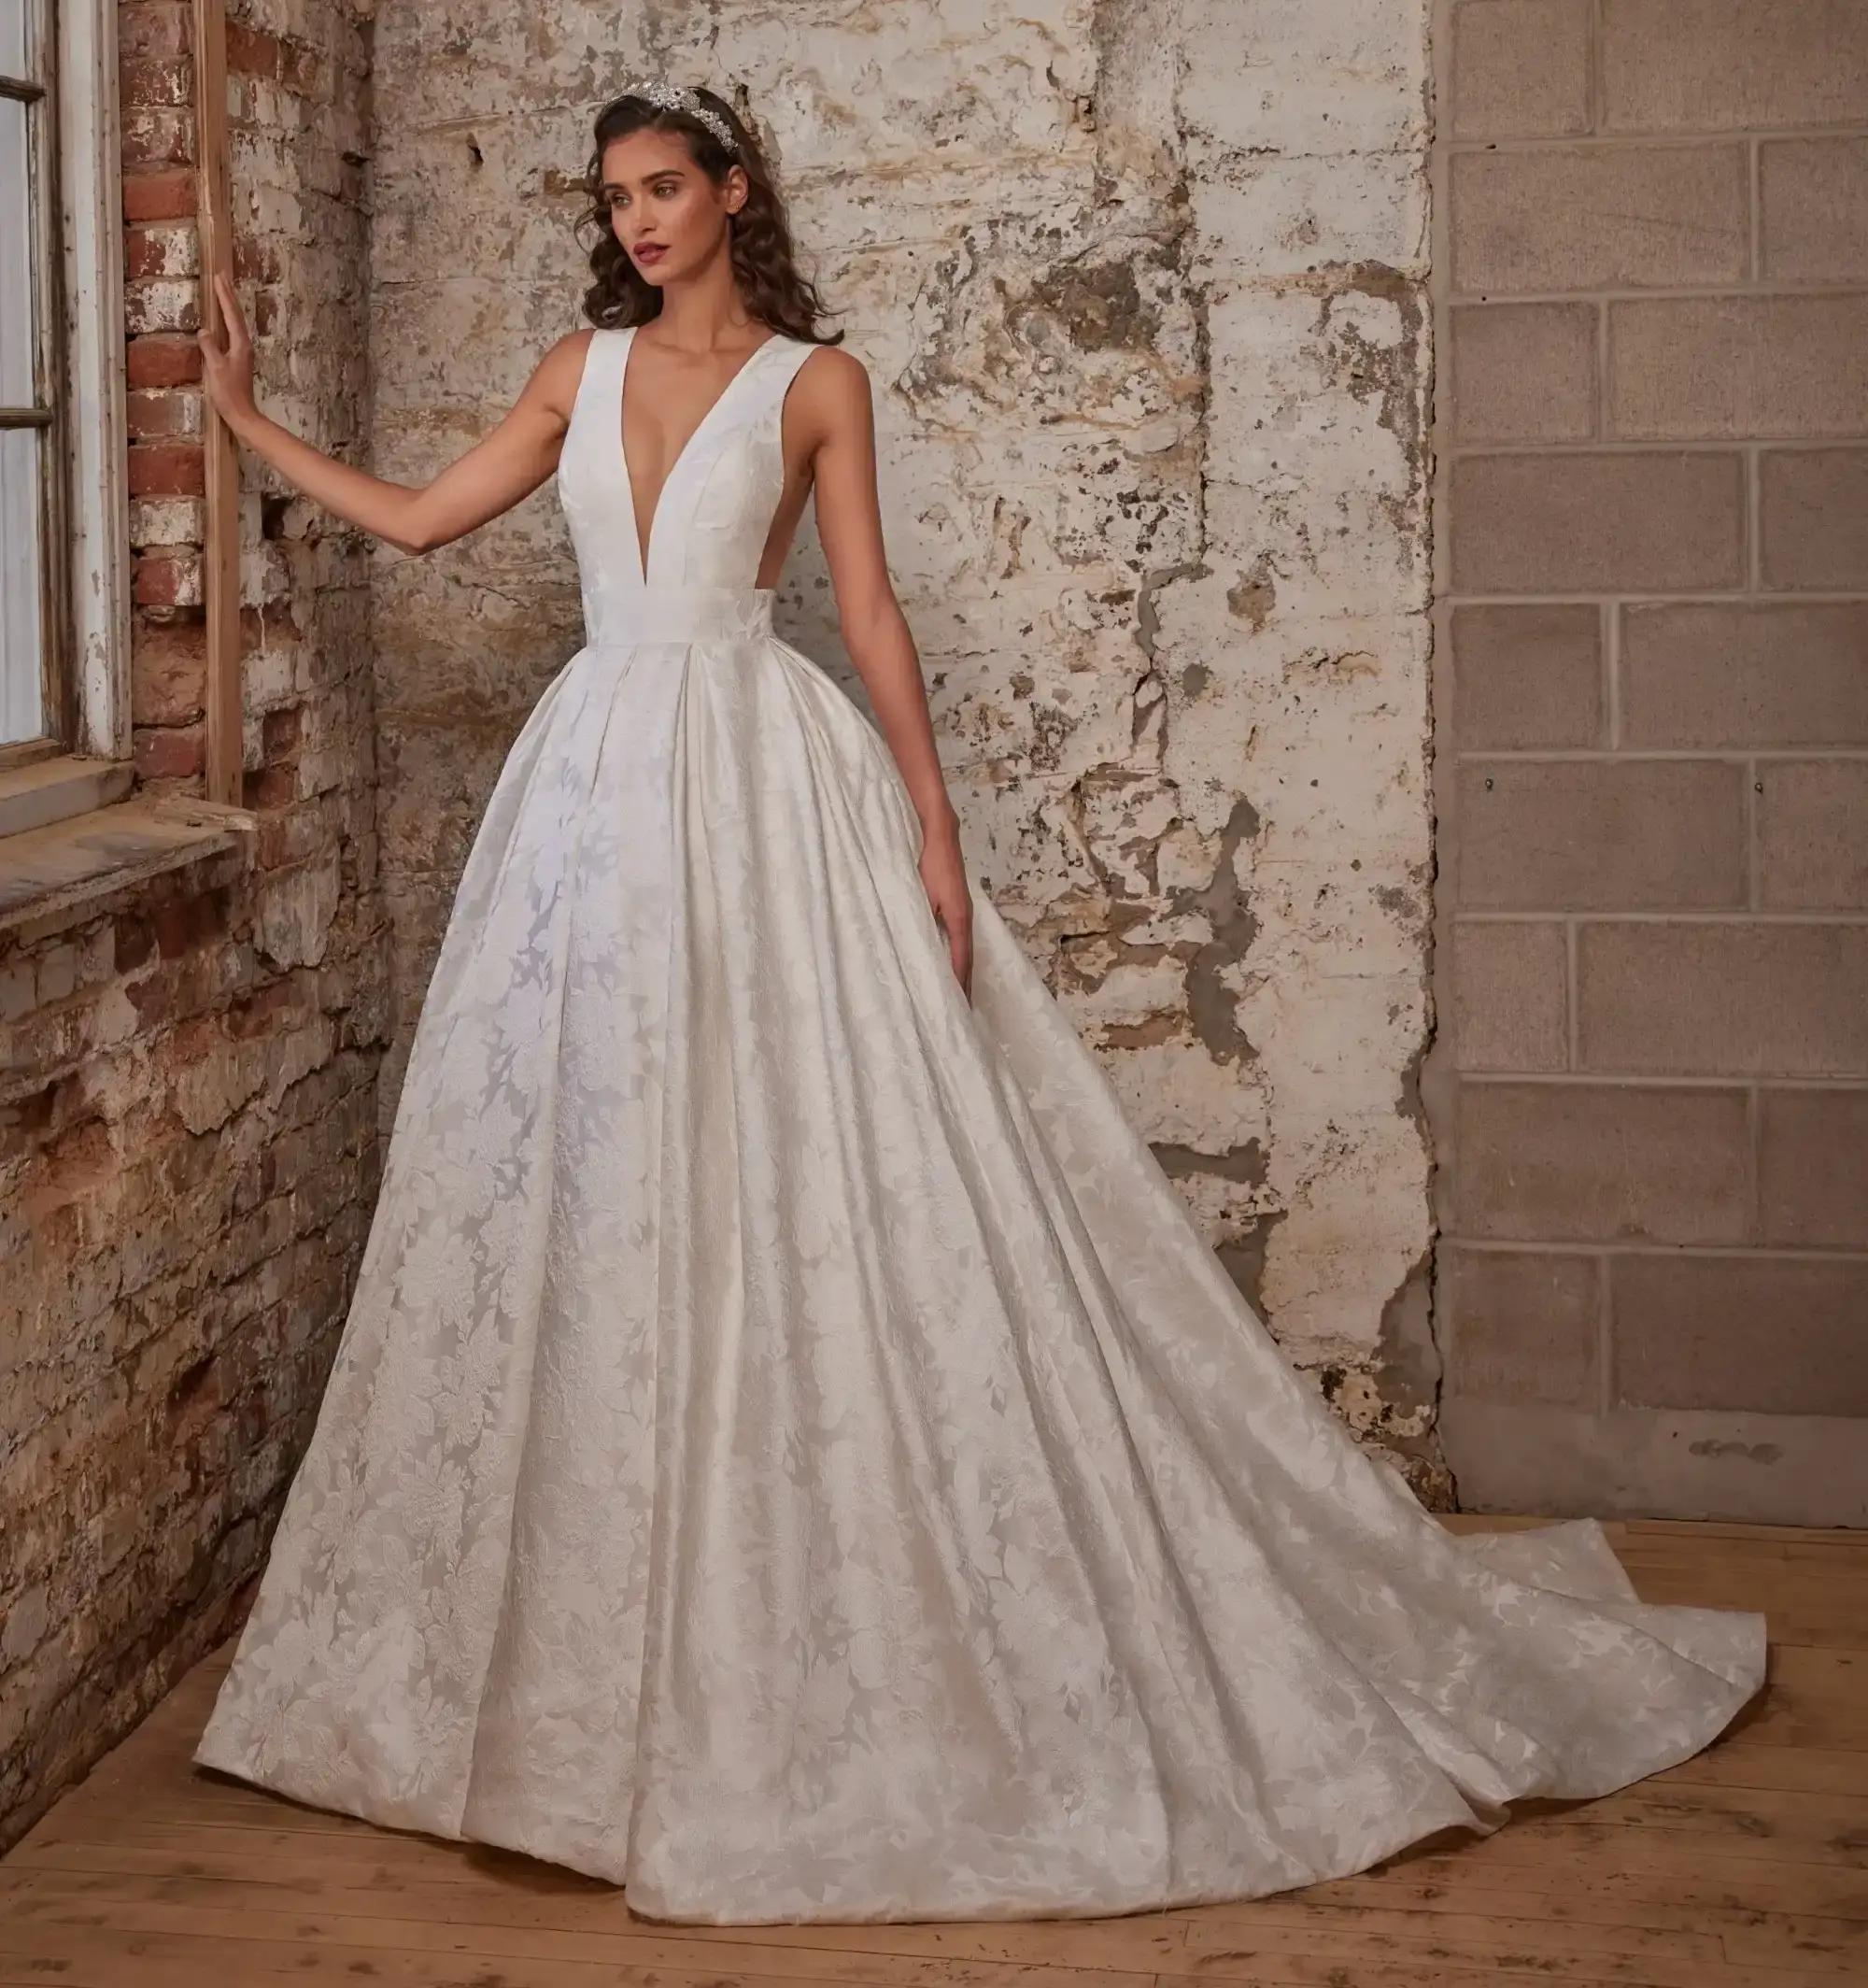 Shop 70+ Short Wedding Dresses Online - Short White Wedding Dresses - Luxe  Redux Bridal